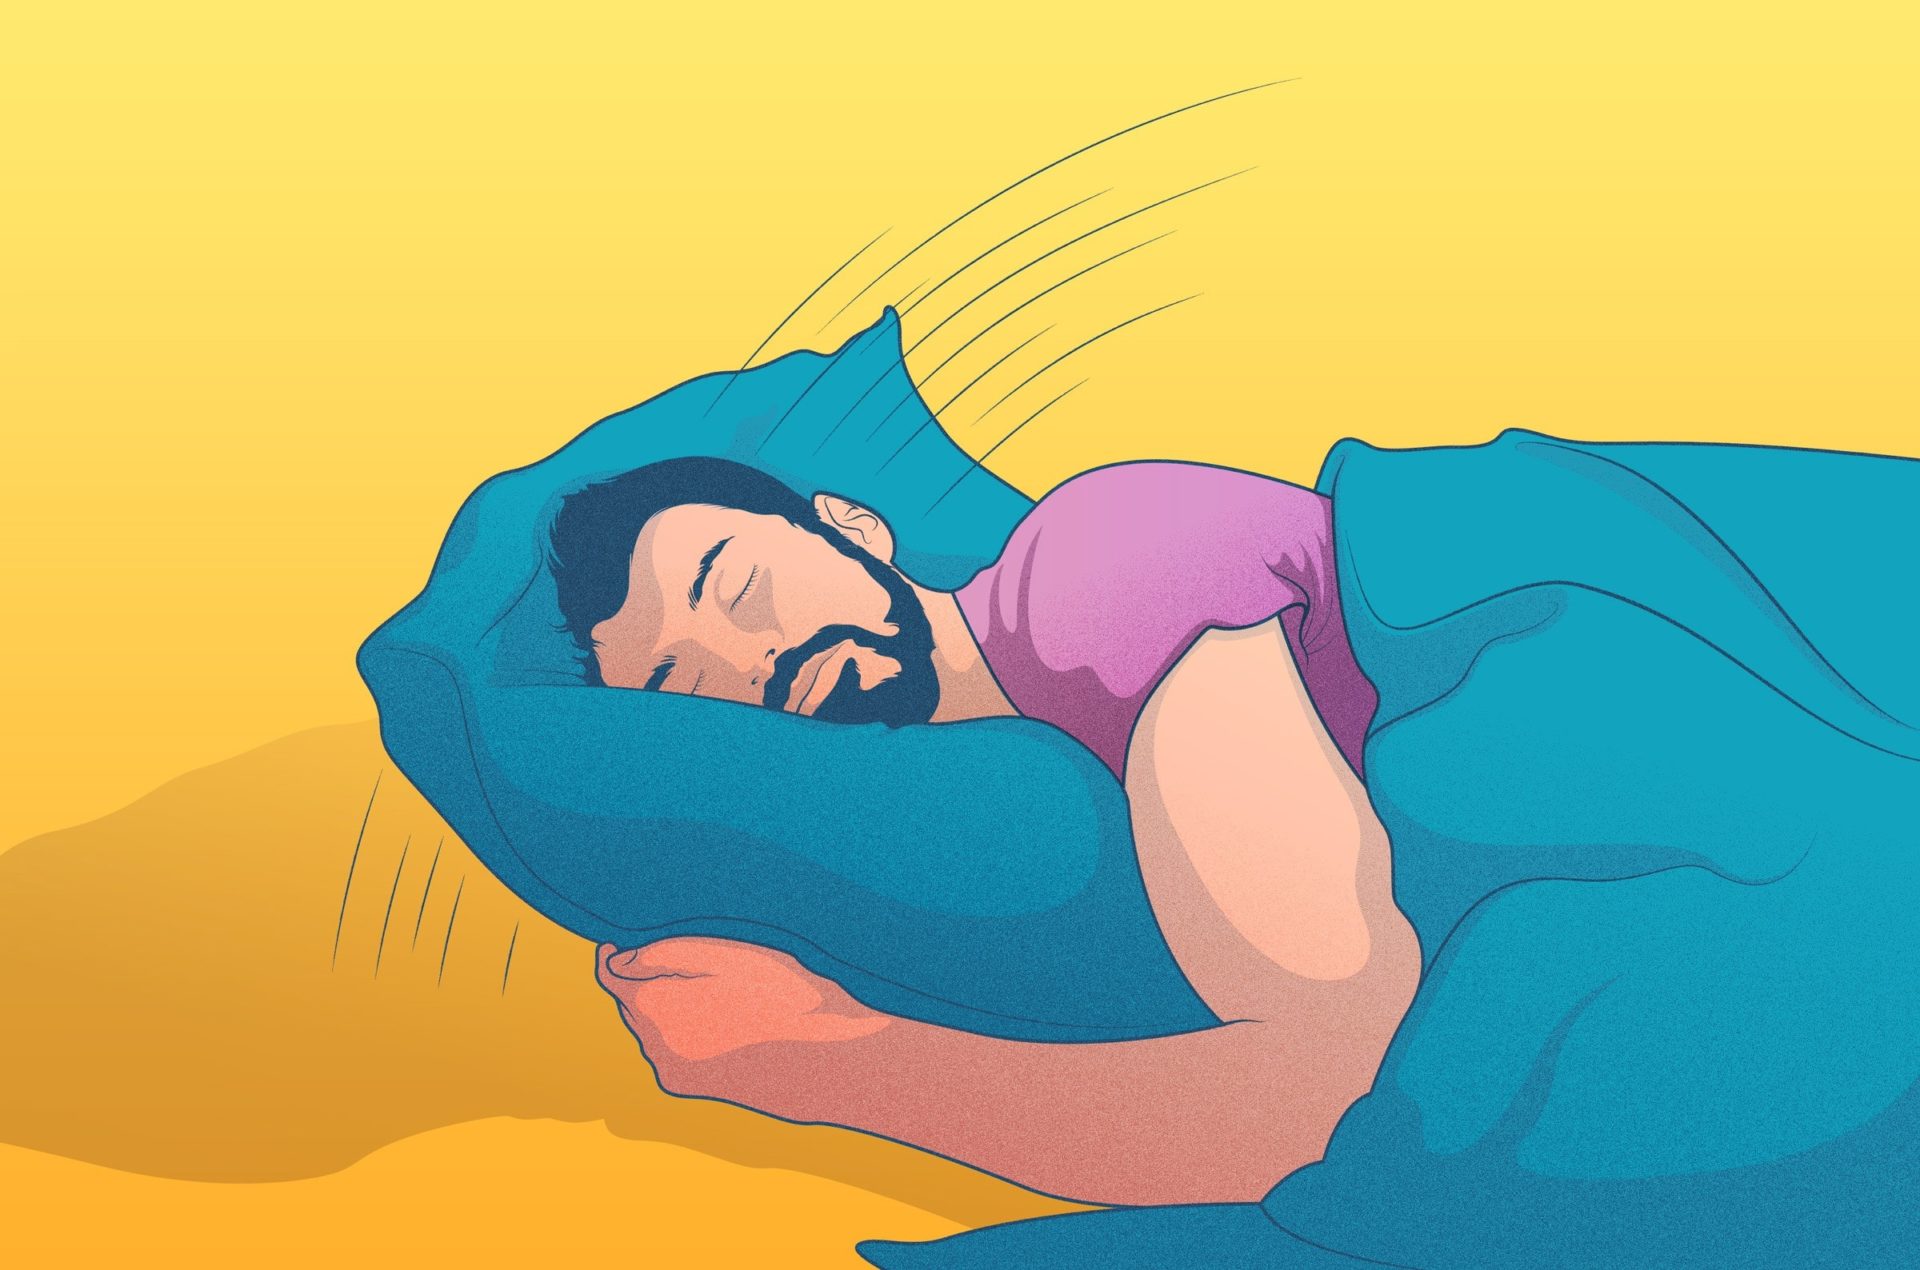 ways to fall asleep